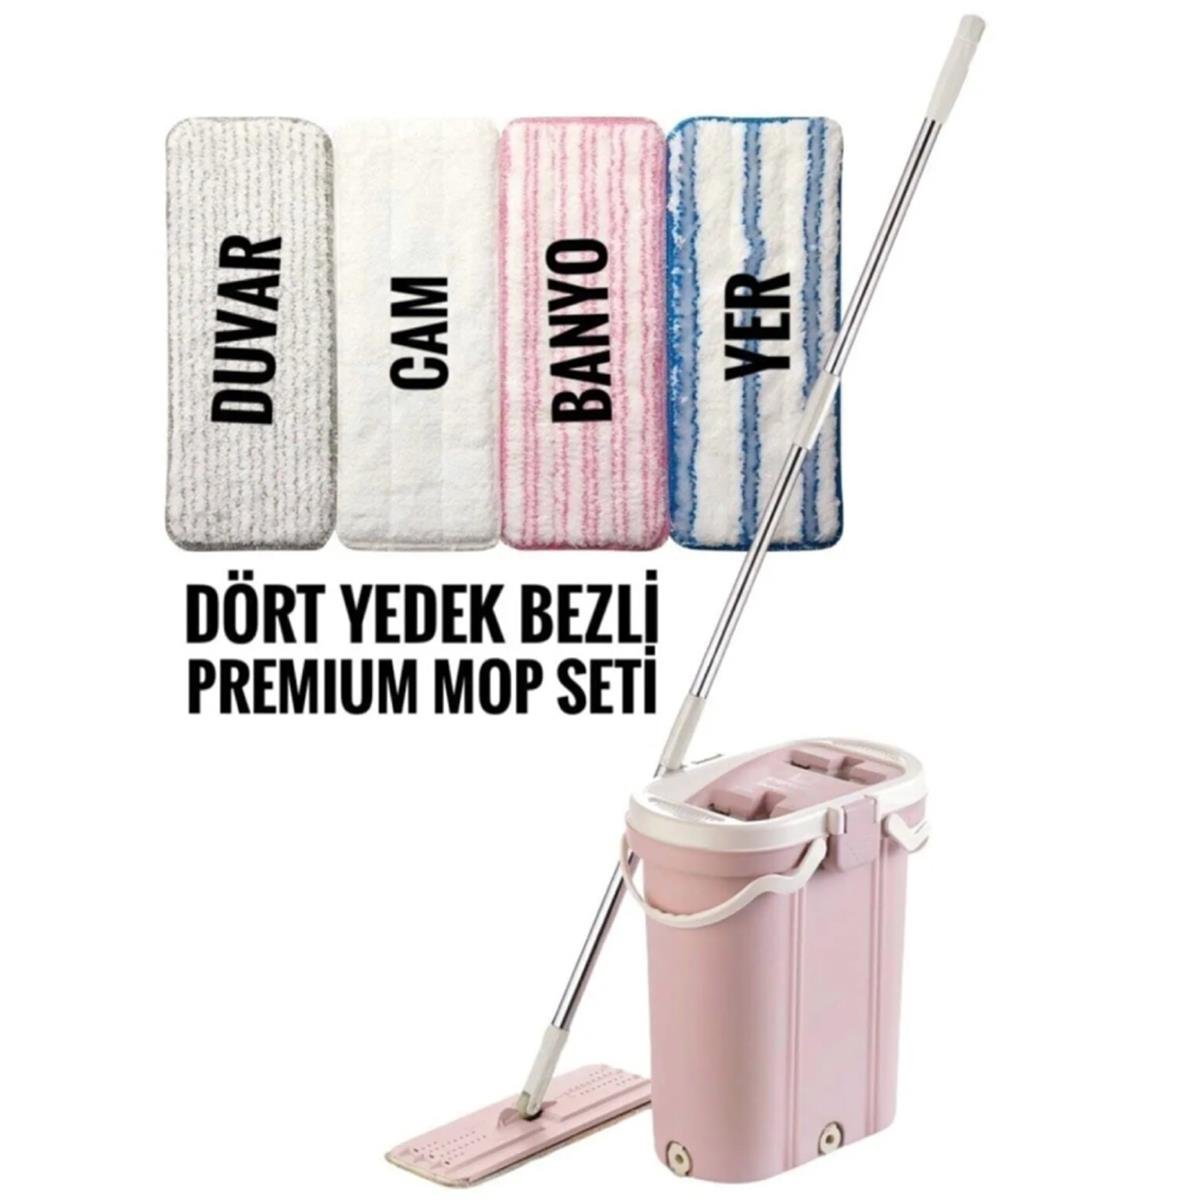 Vip Ahmet Premıum Mop Set + Dörtlü Yedek Bez Vp-500